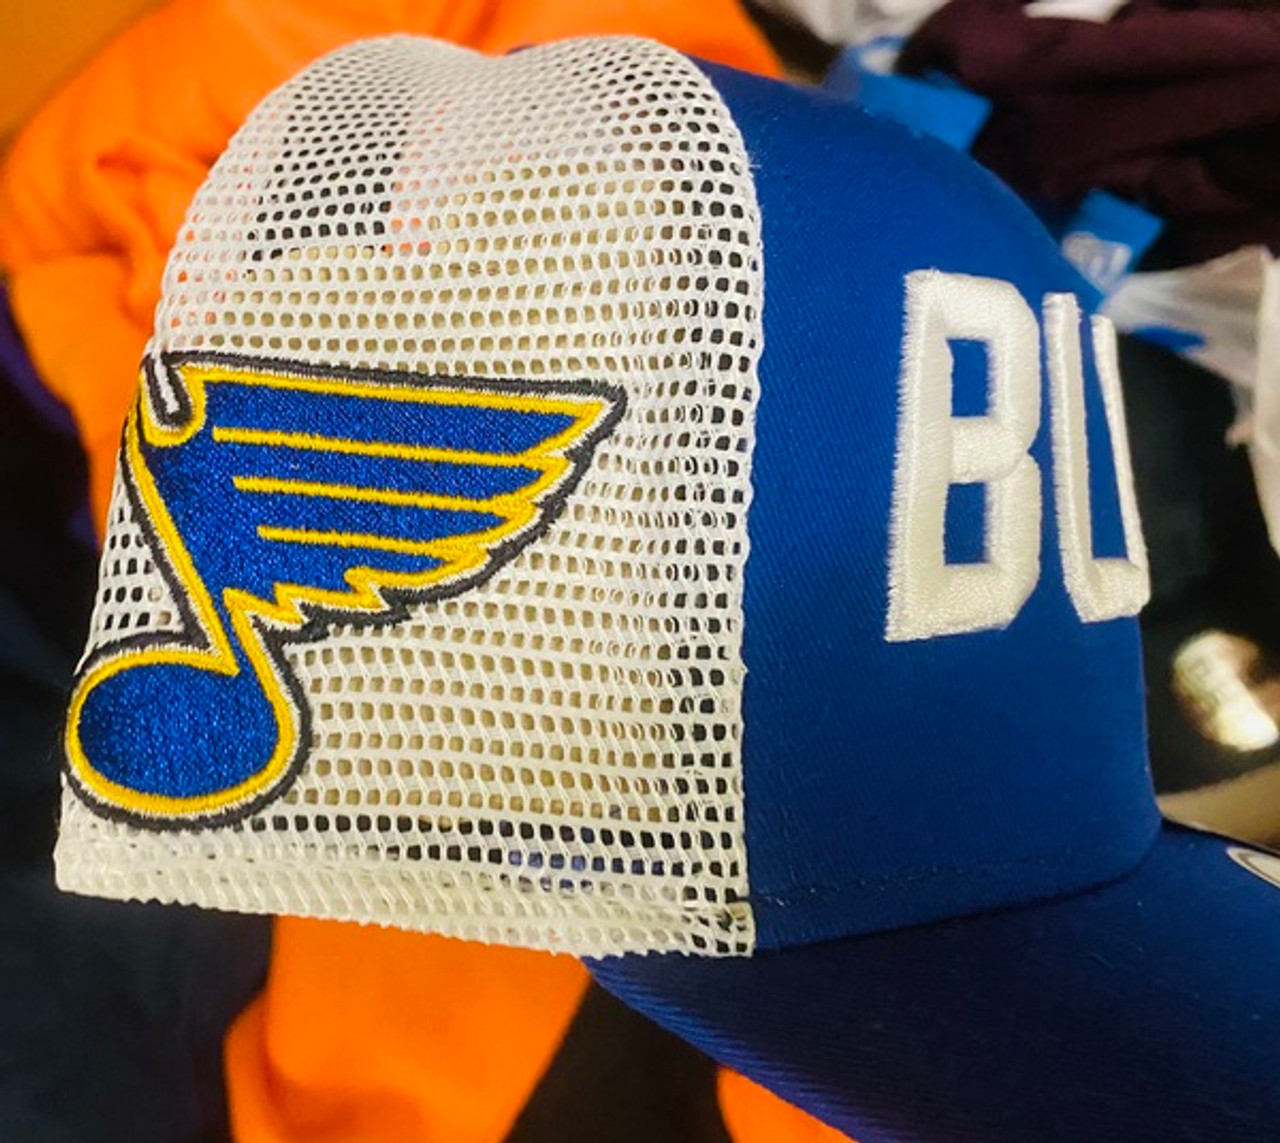 47 Blue St. Louis Blues Franchise Fitted Hat